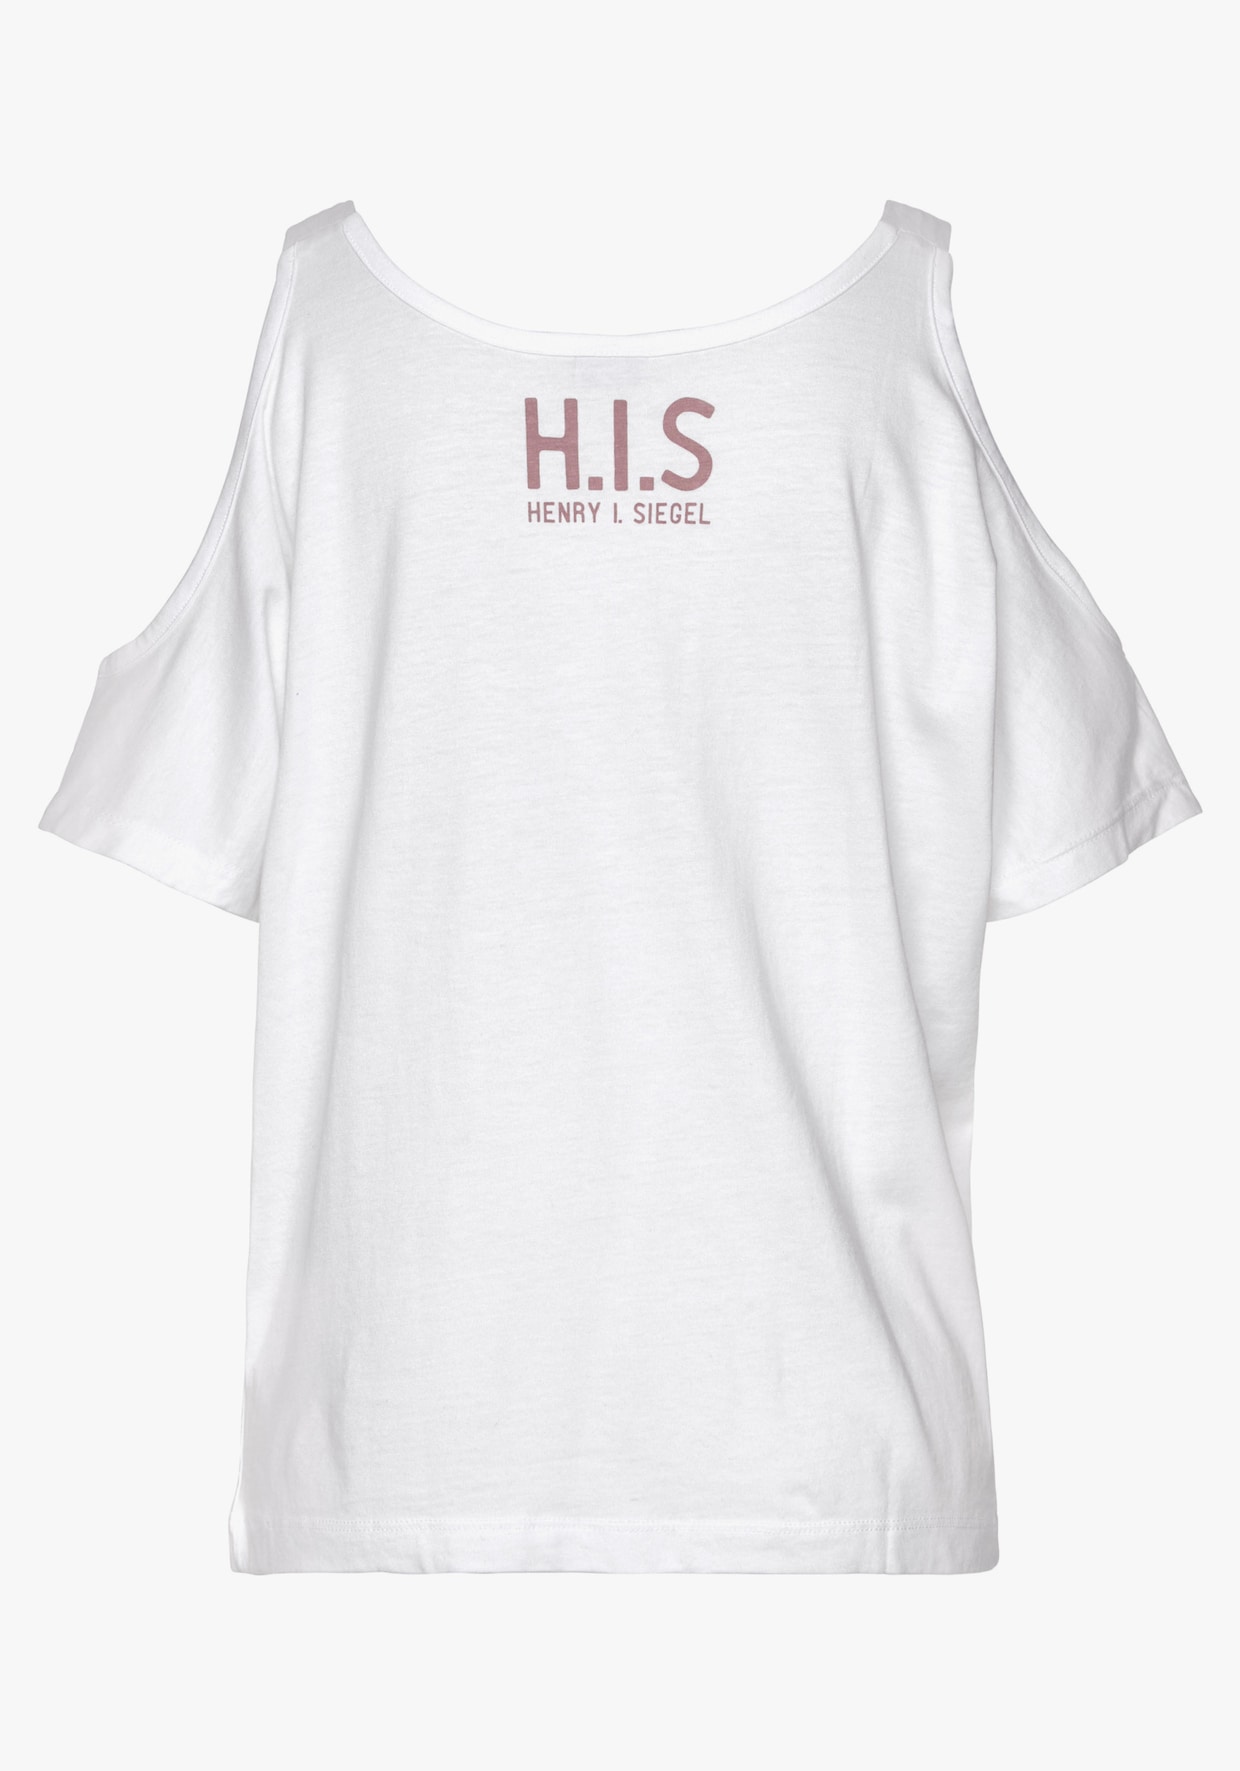 H.I.S T-shirt à manches courtes - blanc